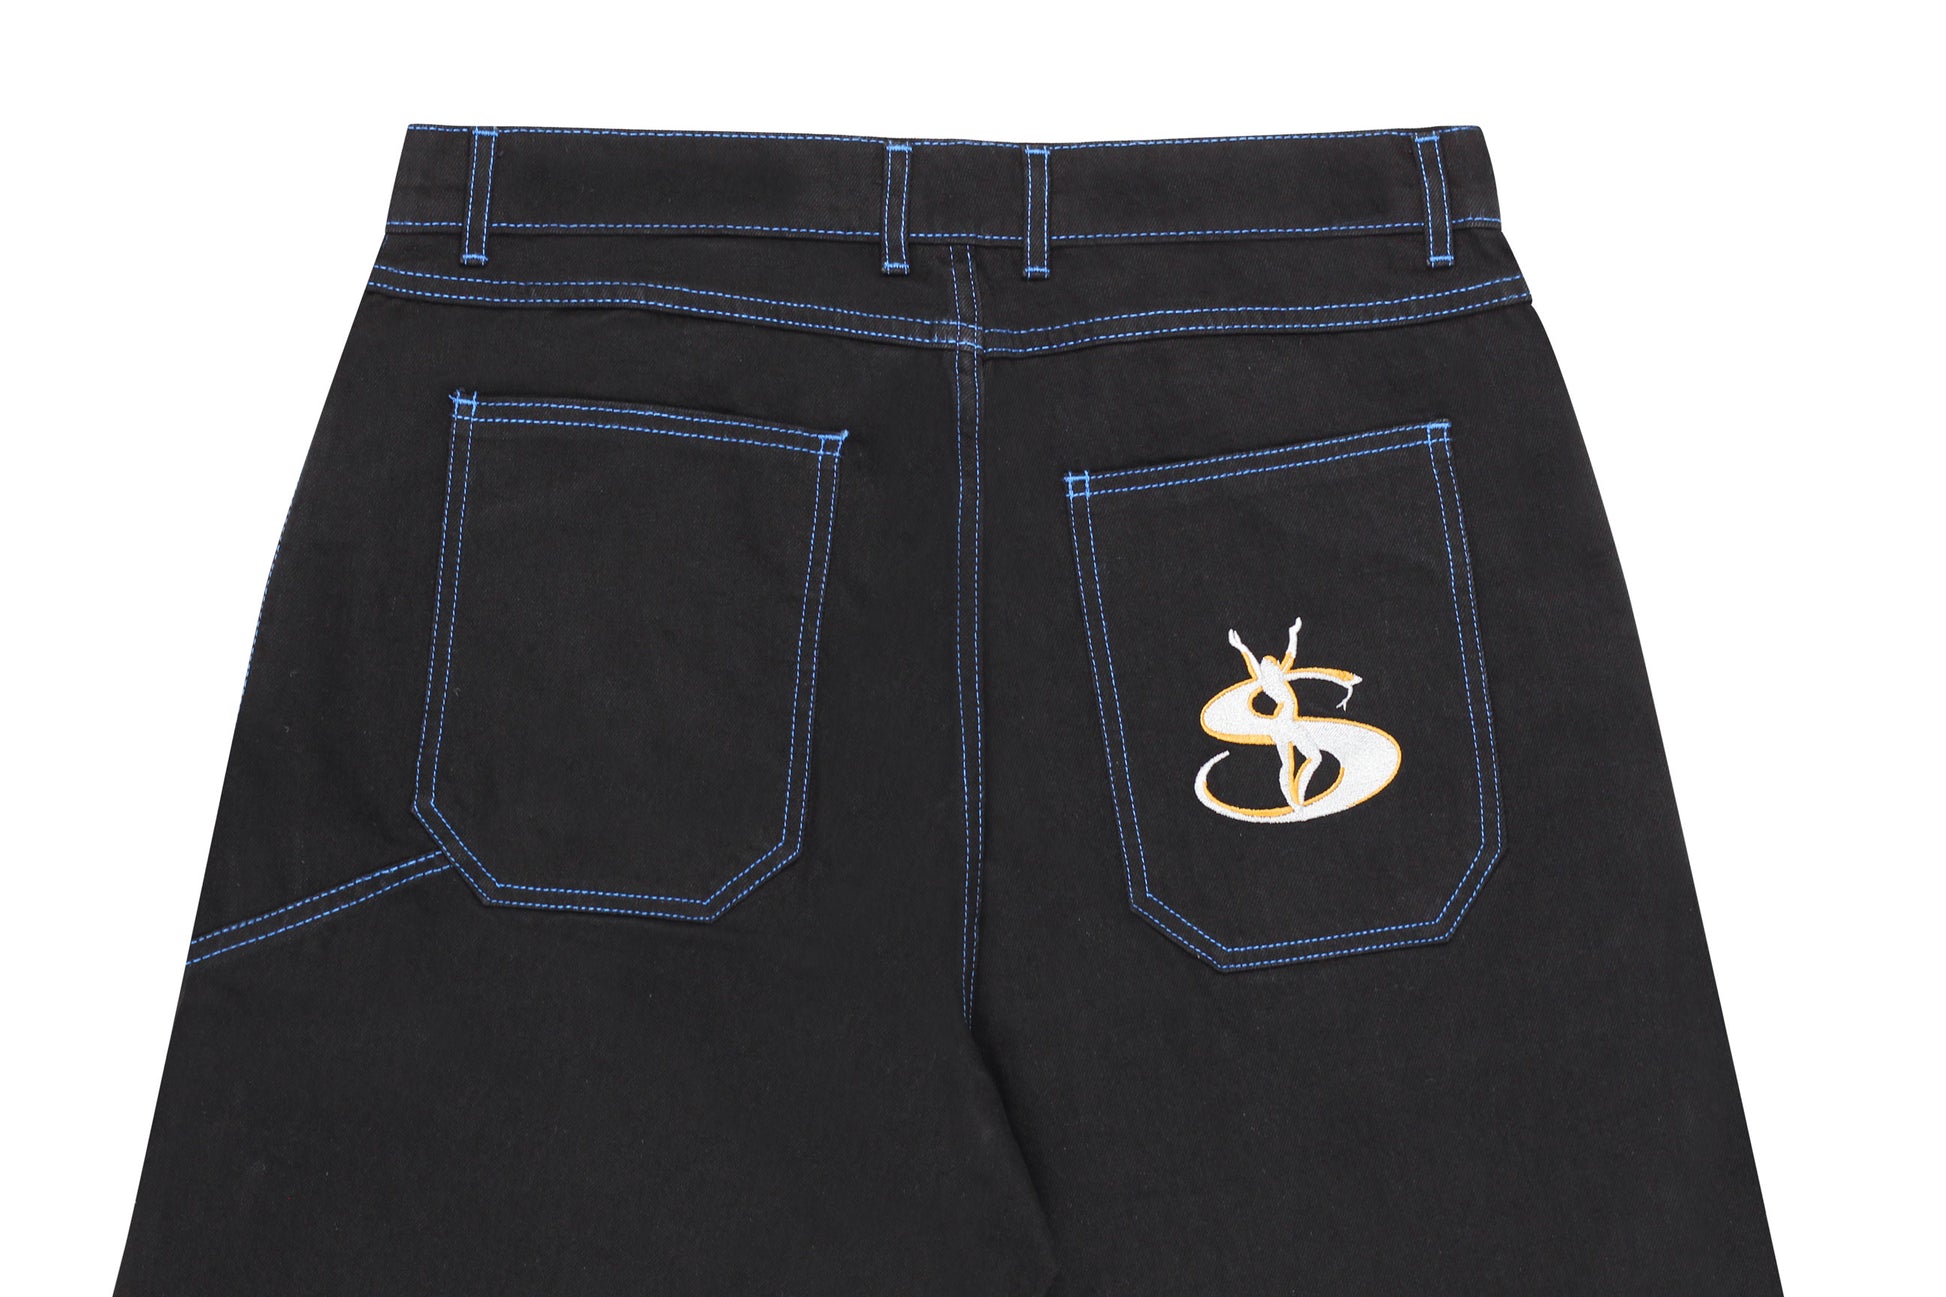 Yardsale Phantasy Jeans black S 男女兼用2013年にDanielK